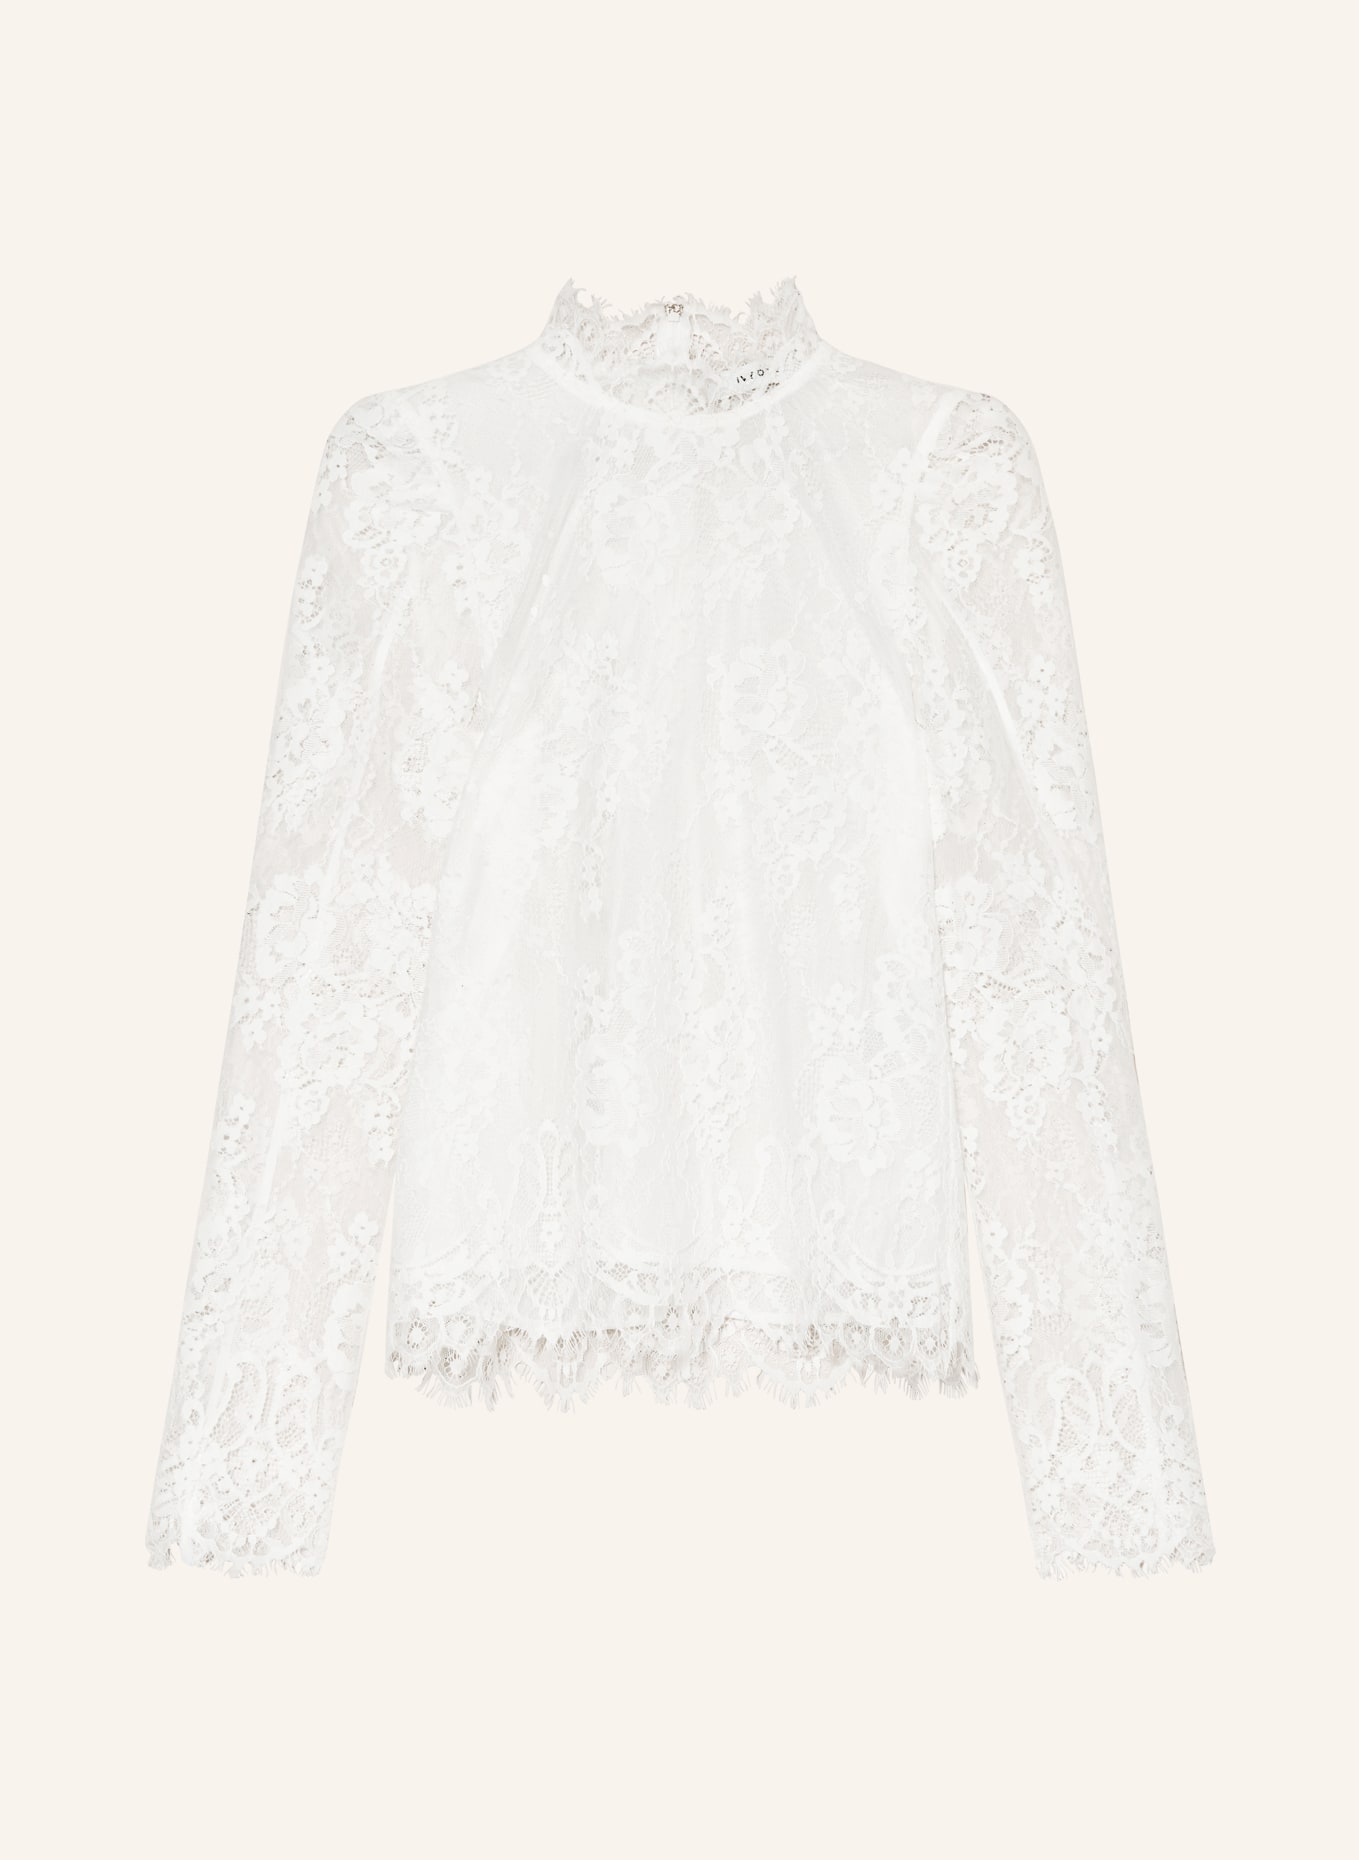 IVY OAK Shirt blouse BRIHANNA made of lace, Color: WHITE (Image 1)